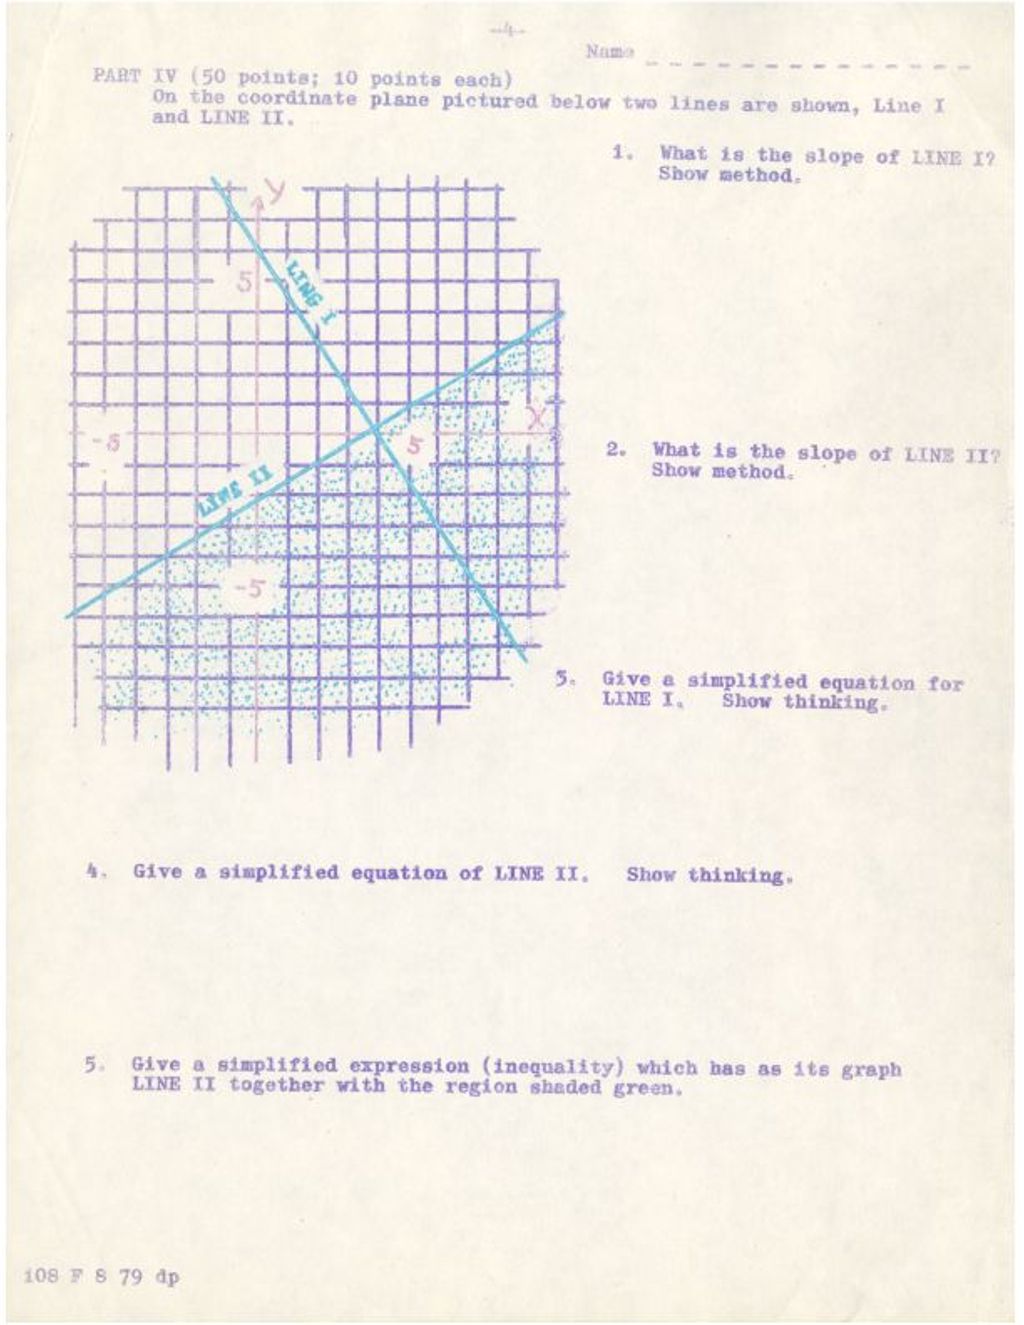 Miniature of Part IV (Coordinate grid)